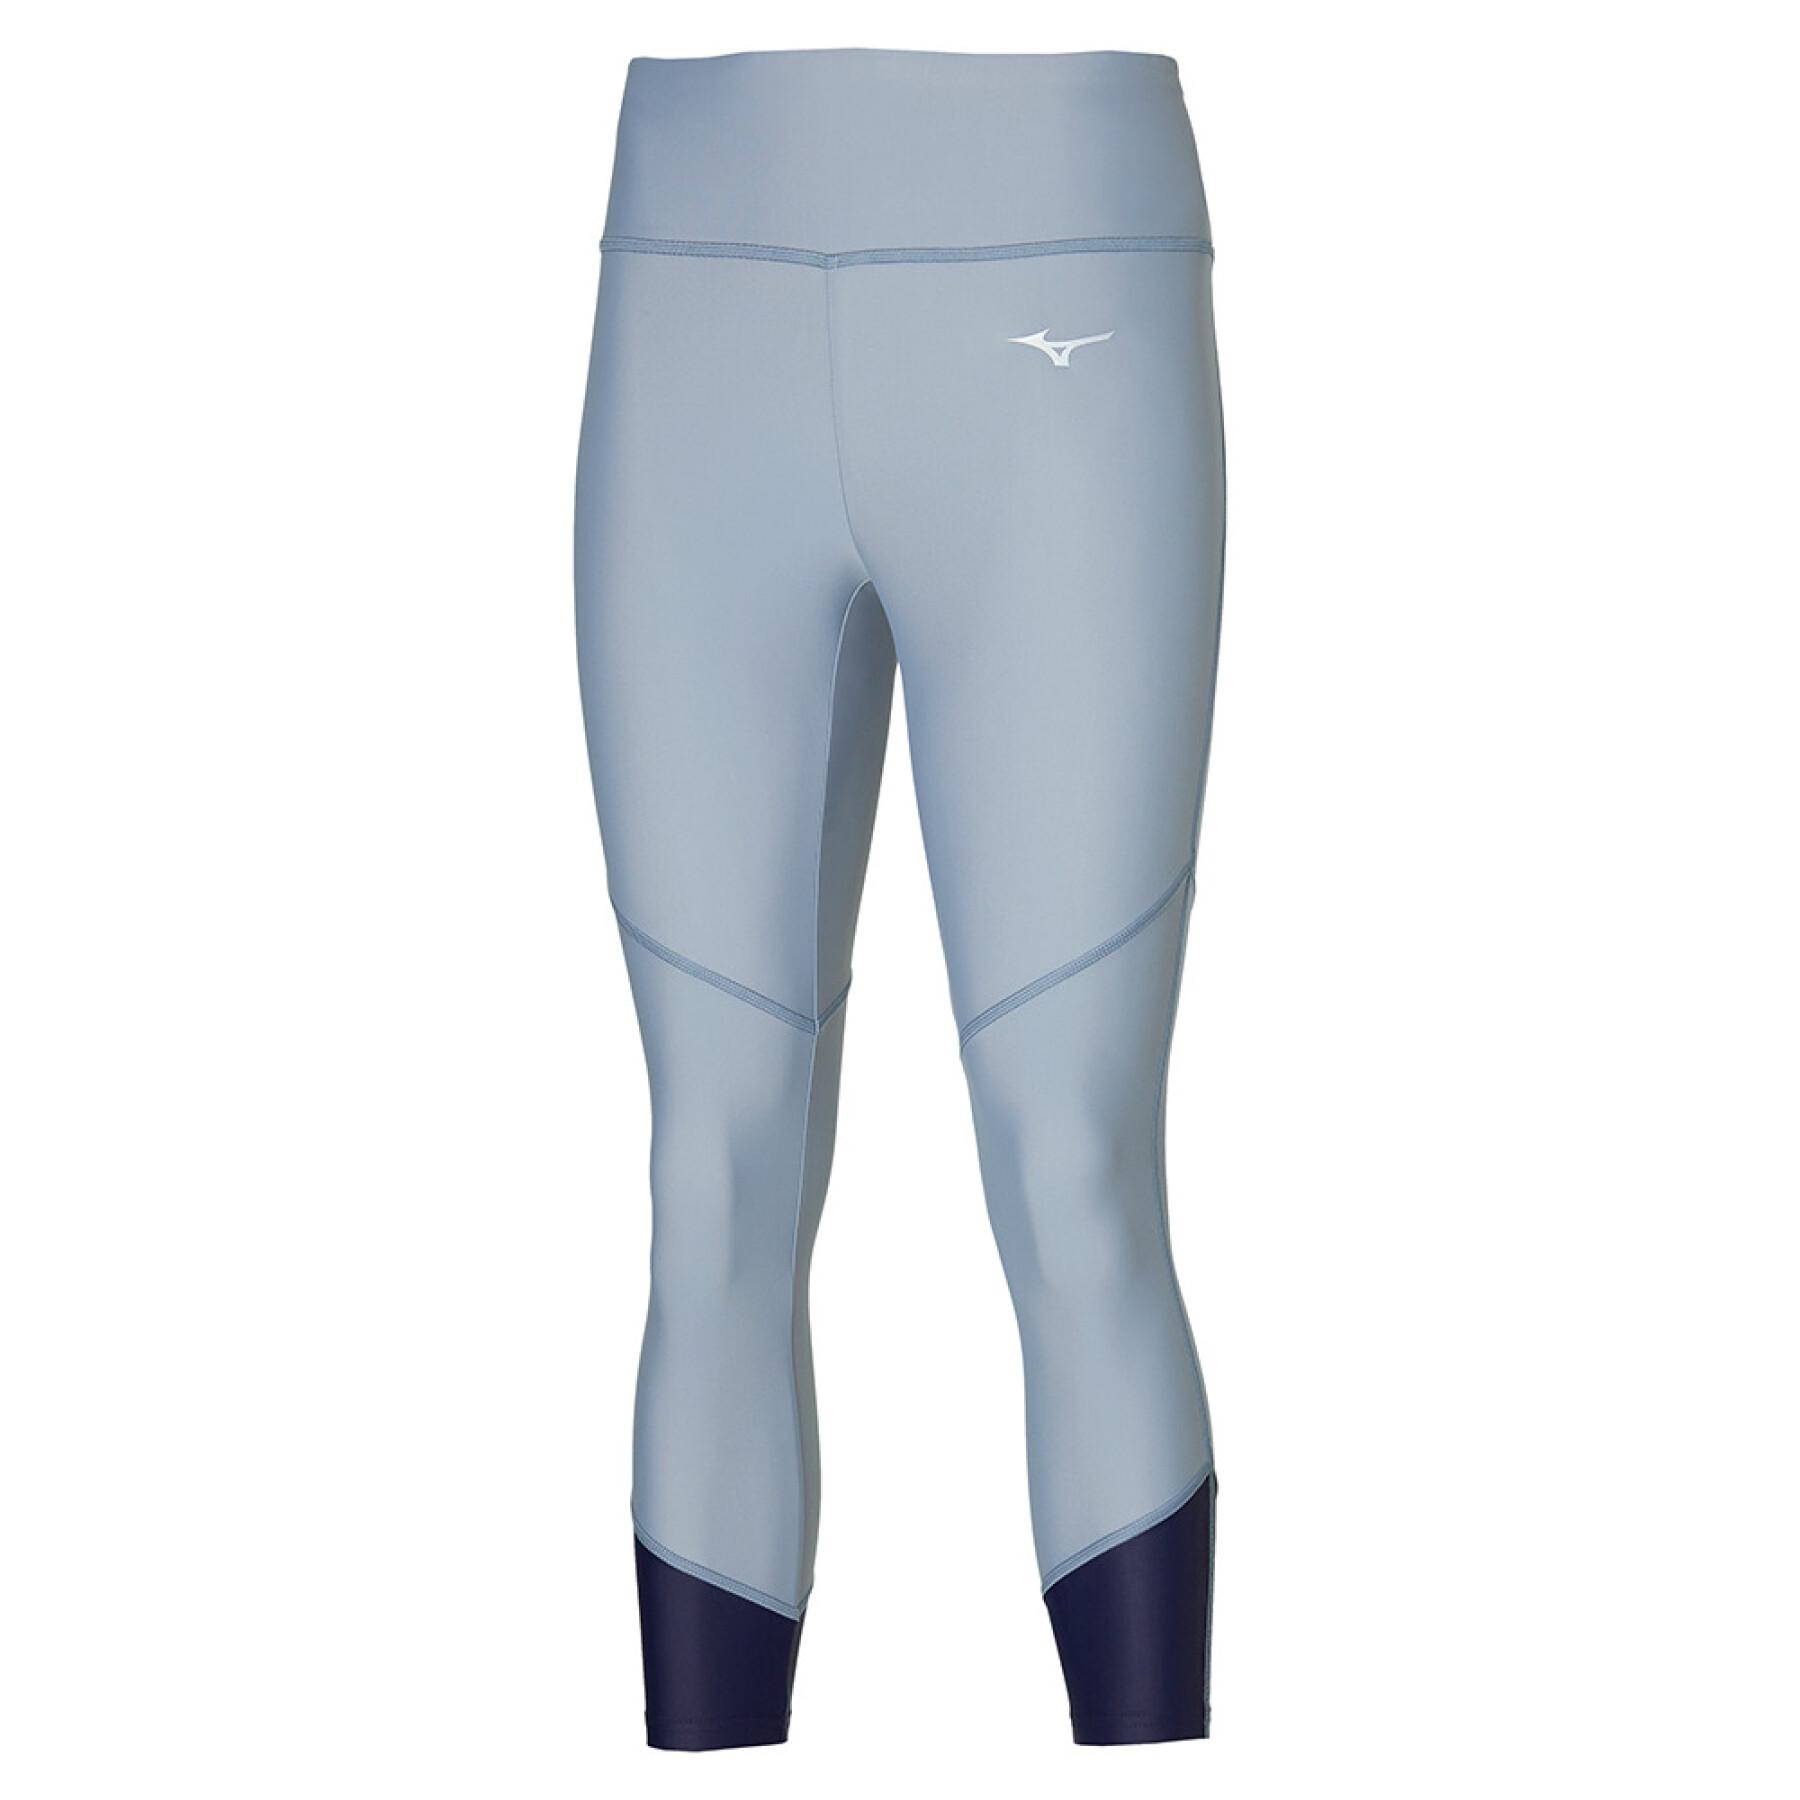 3/4 elite compression pants McDavid - Baselayers - Men's wear